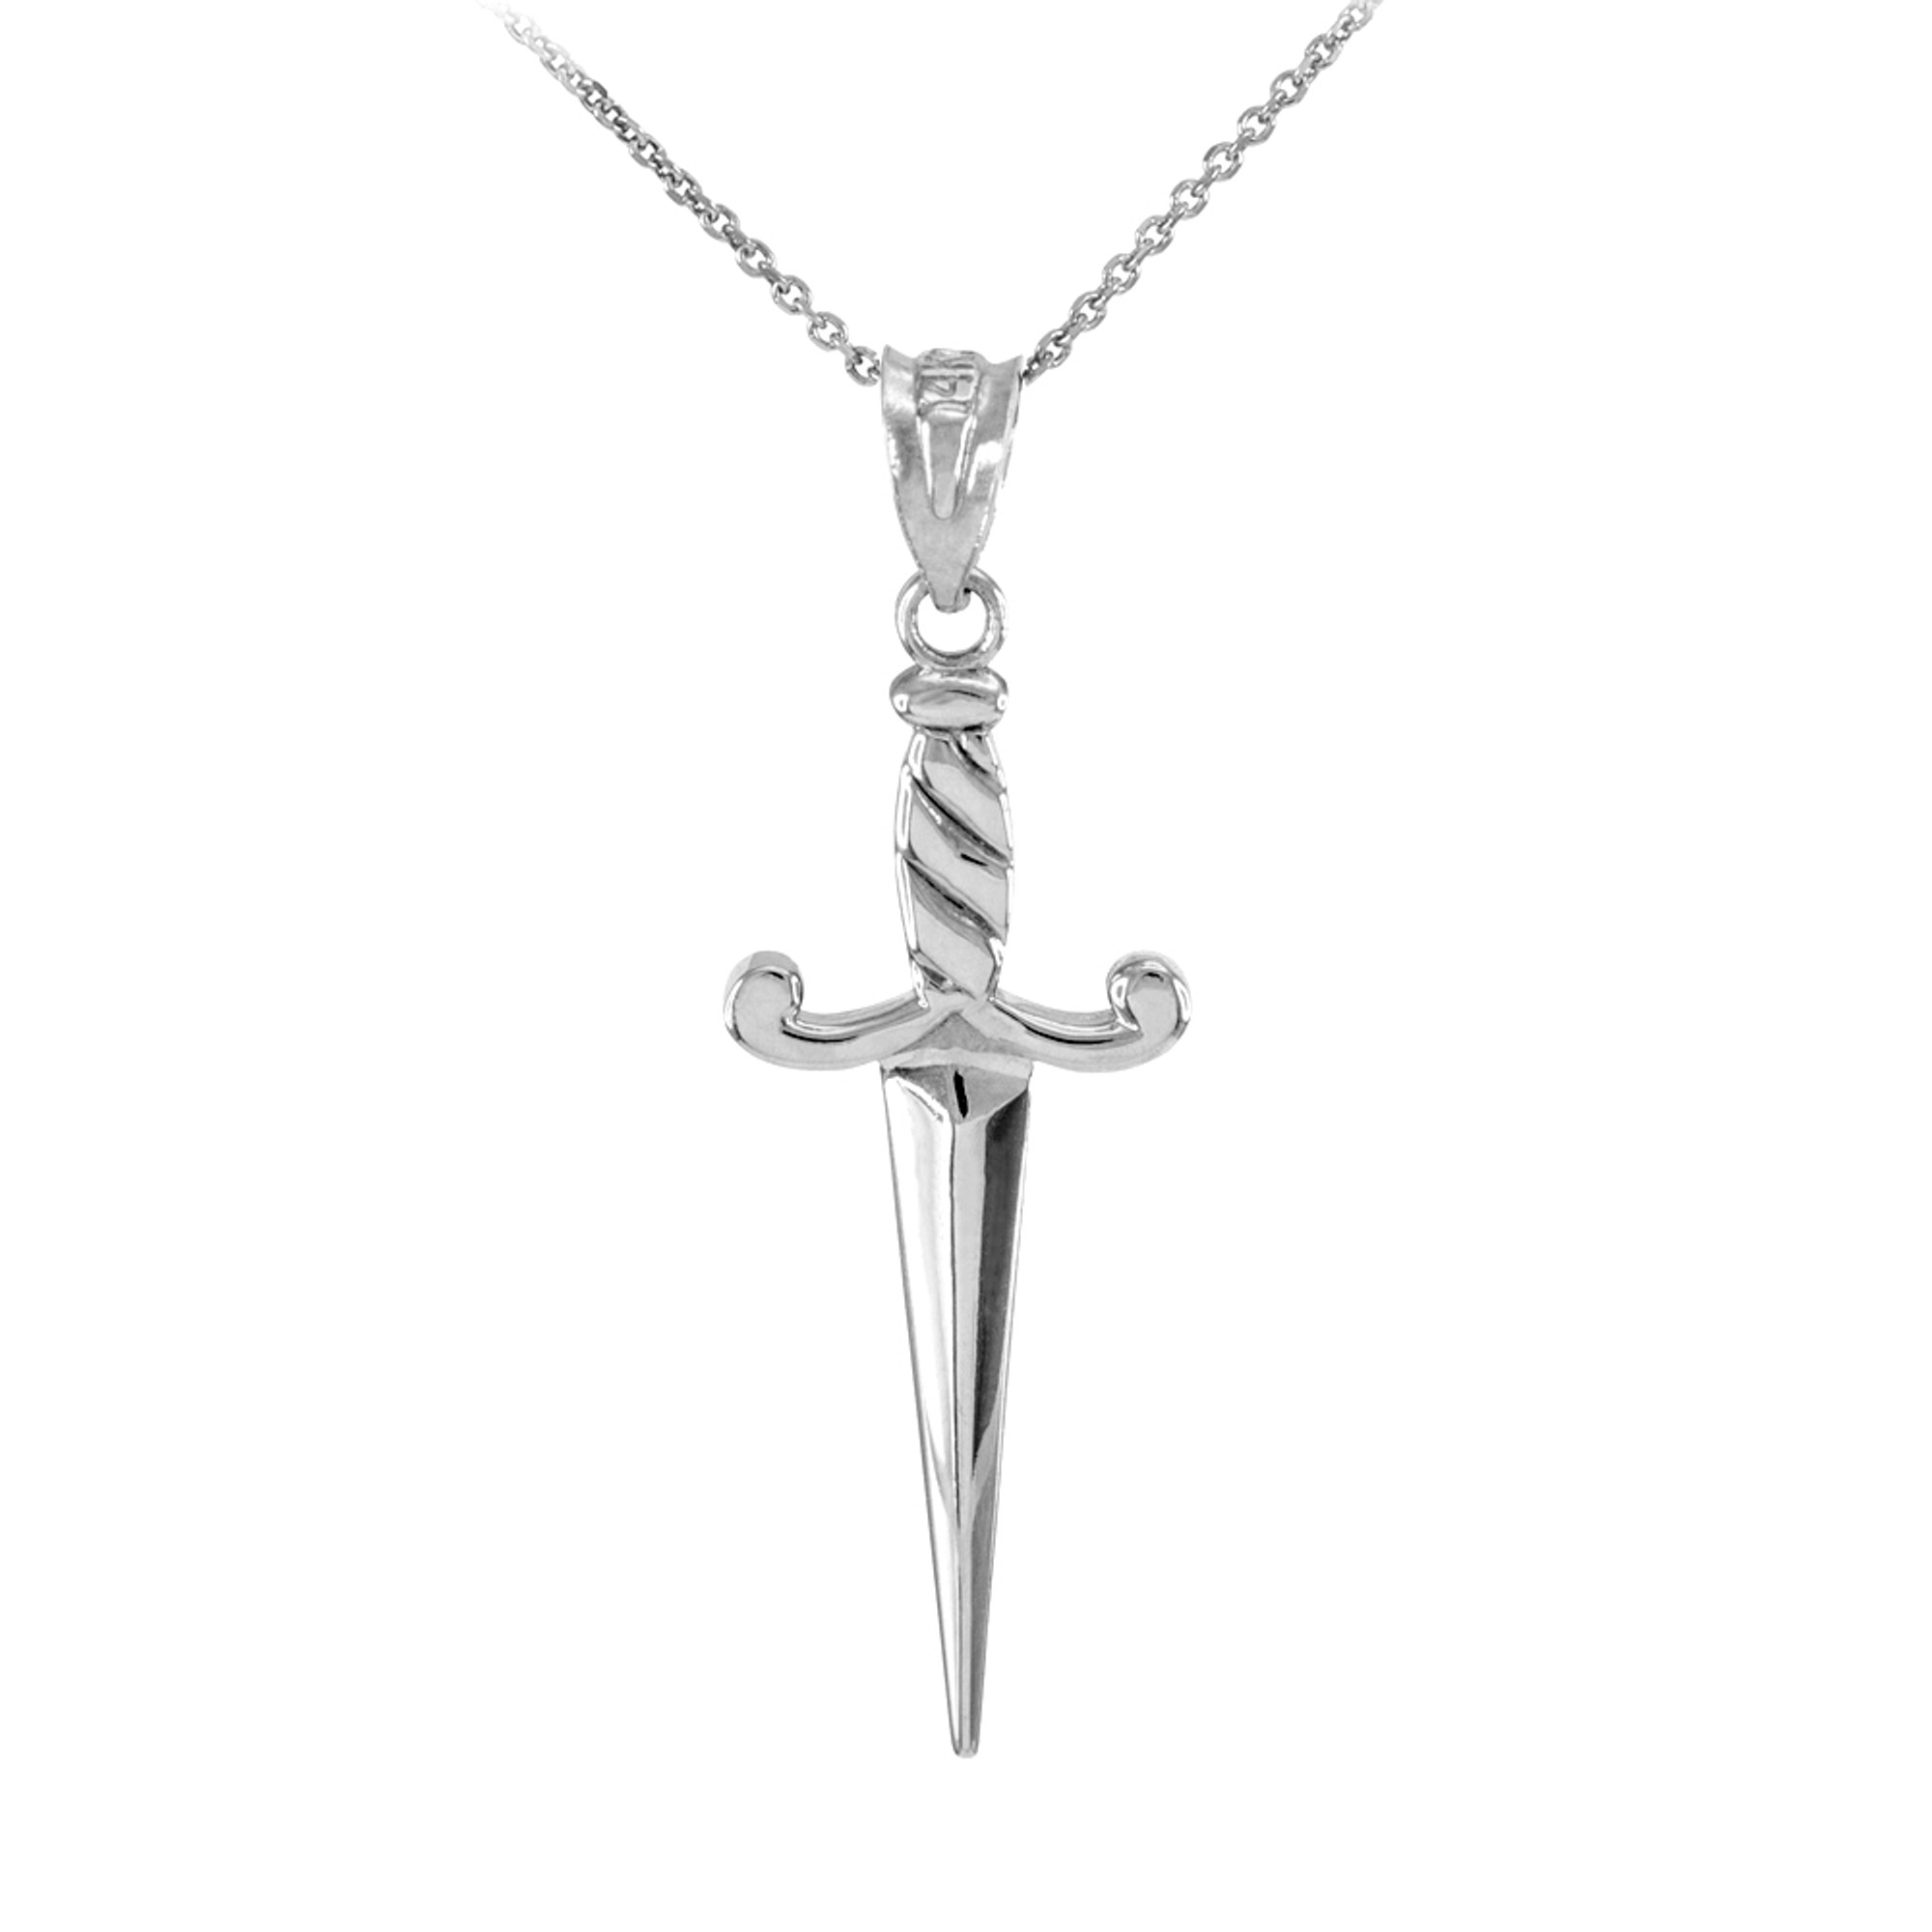 Sword Pendant Sterling Silver 925 Dagger Charm Minimalistic Unisex Gift  Jewelry | eBay